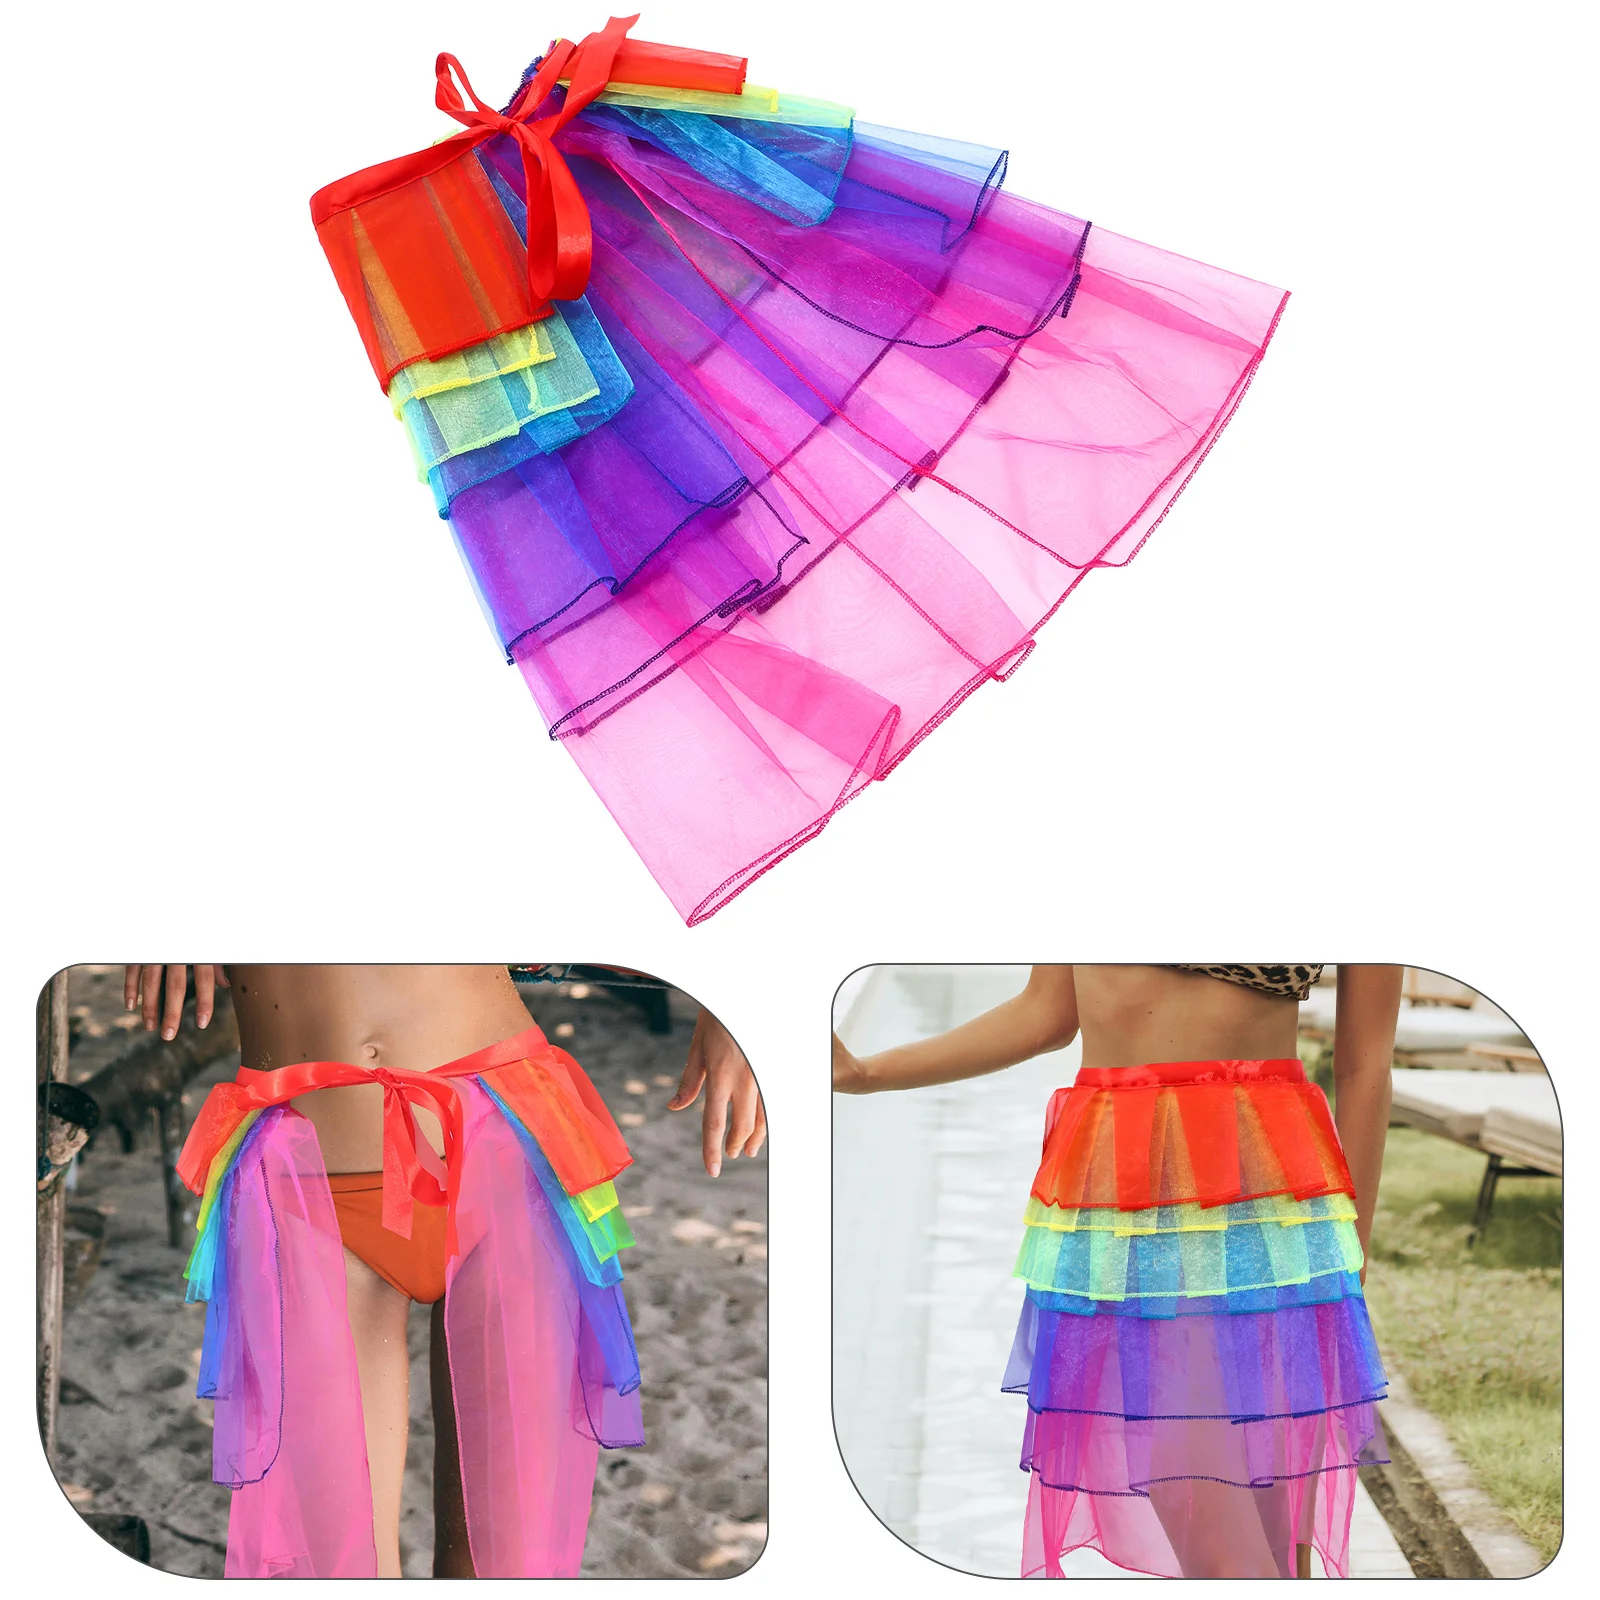 Womens Tutu Skirt Layered Organza Rainbow Performance Dancing Skirt Dress free size